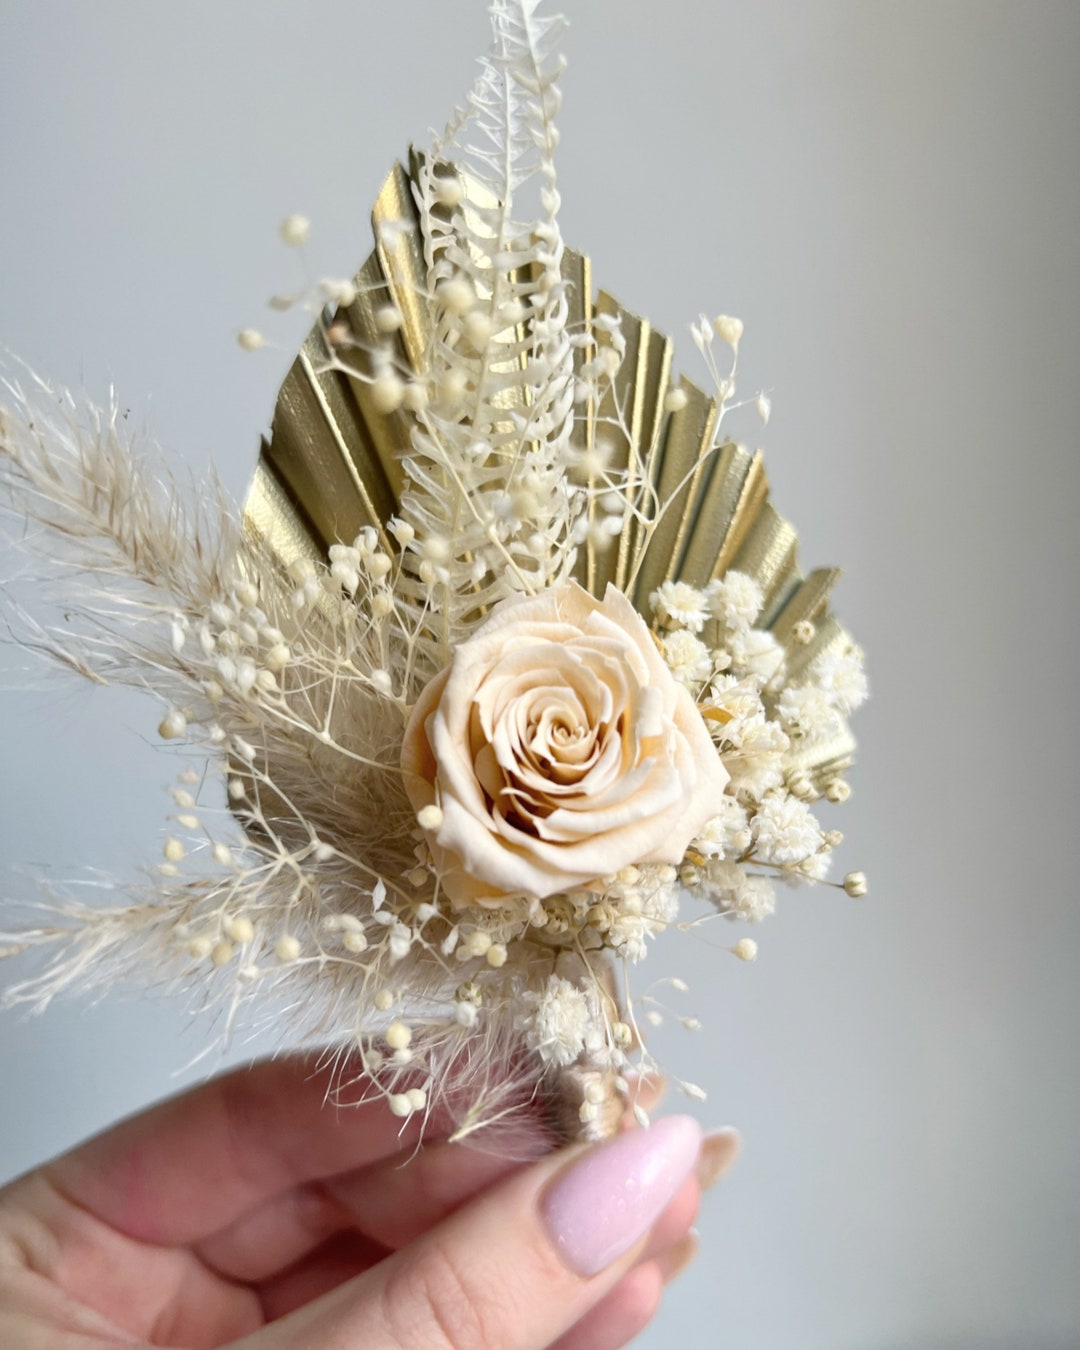 Pressed Flower Bouquet - Boutonniere Gold Frame – Midtown Bramble & Bloom